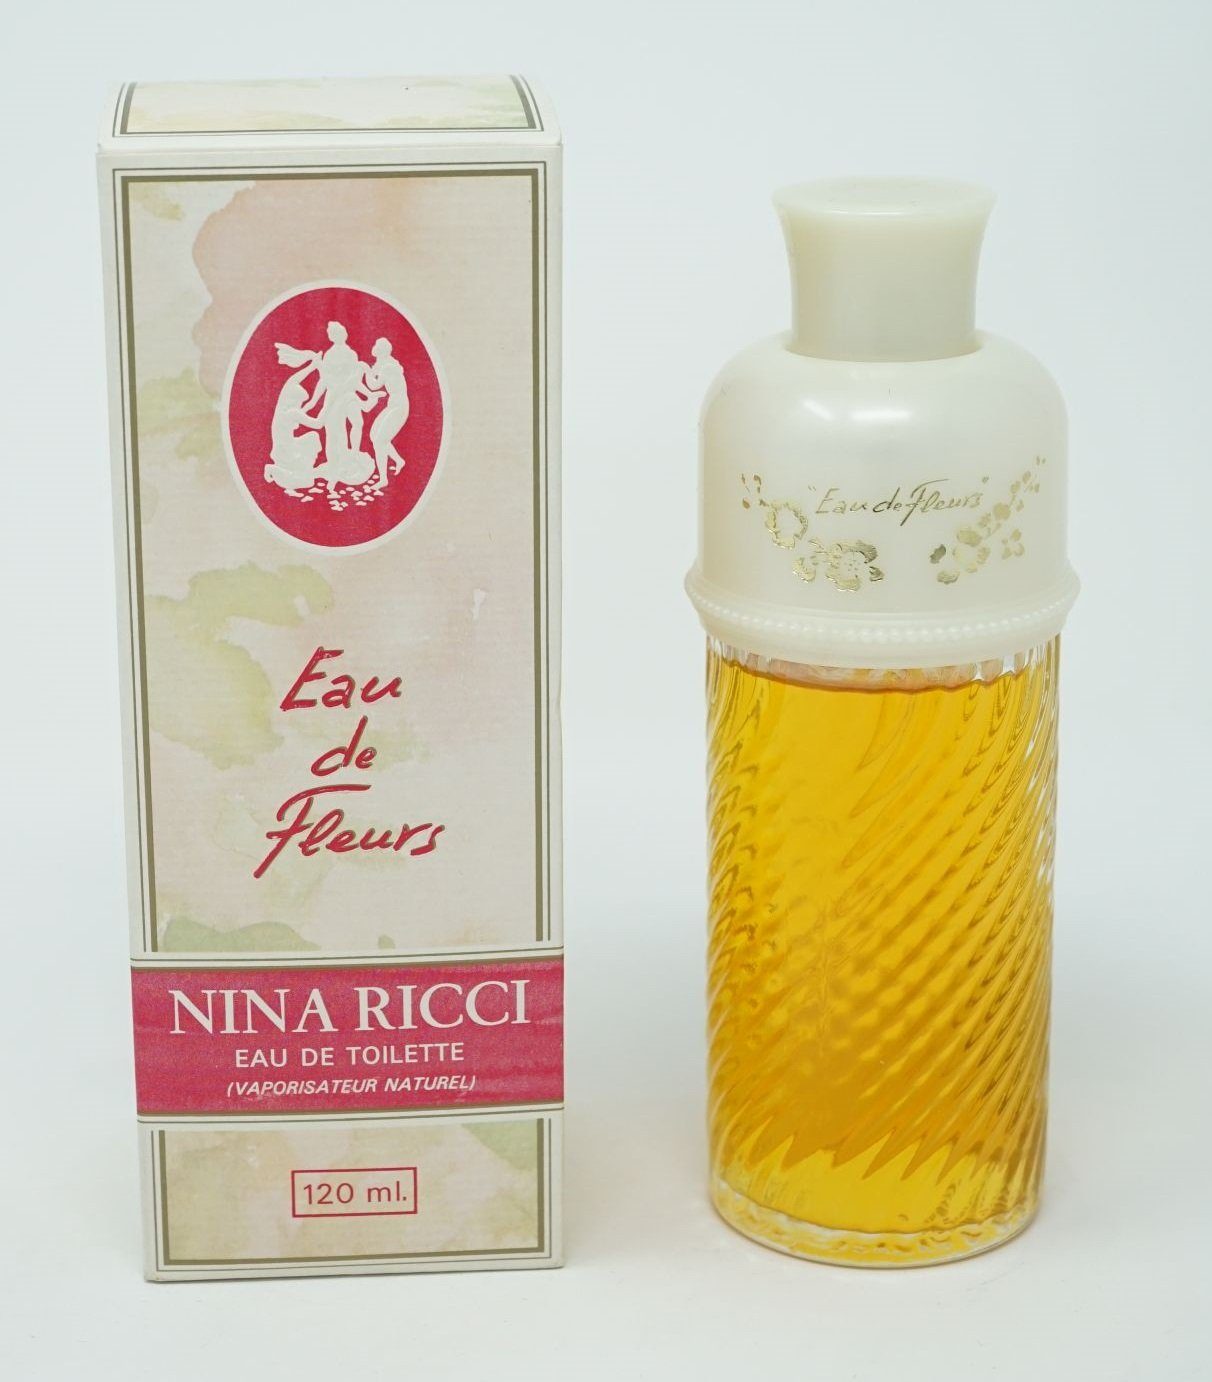 Toilette Nina Eau Toilette Fleurs de de Eau spray 120ml Nina Eau Ricci Ricci de